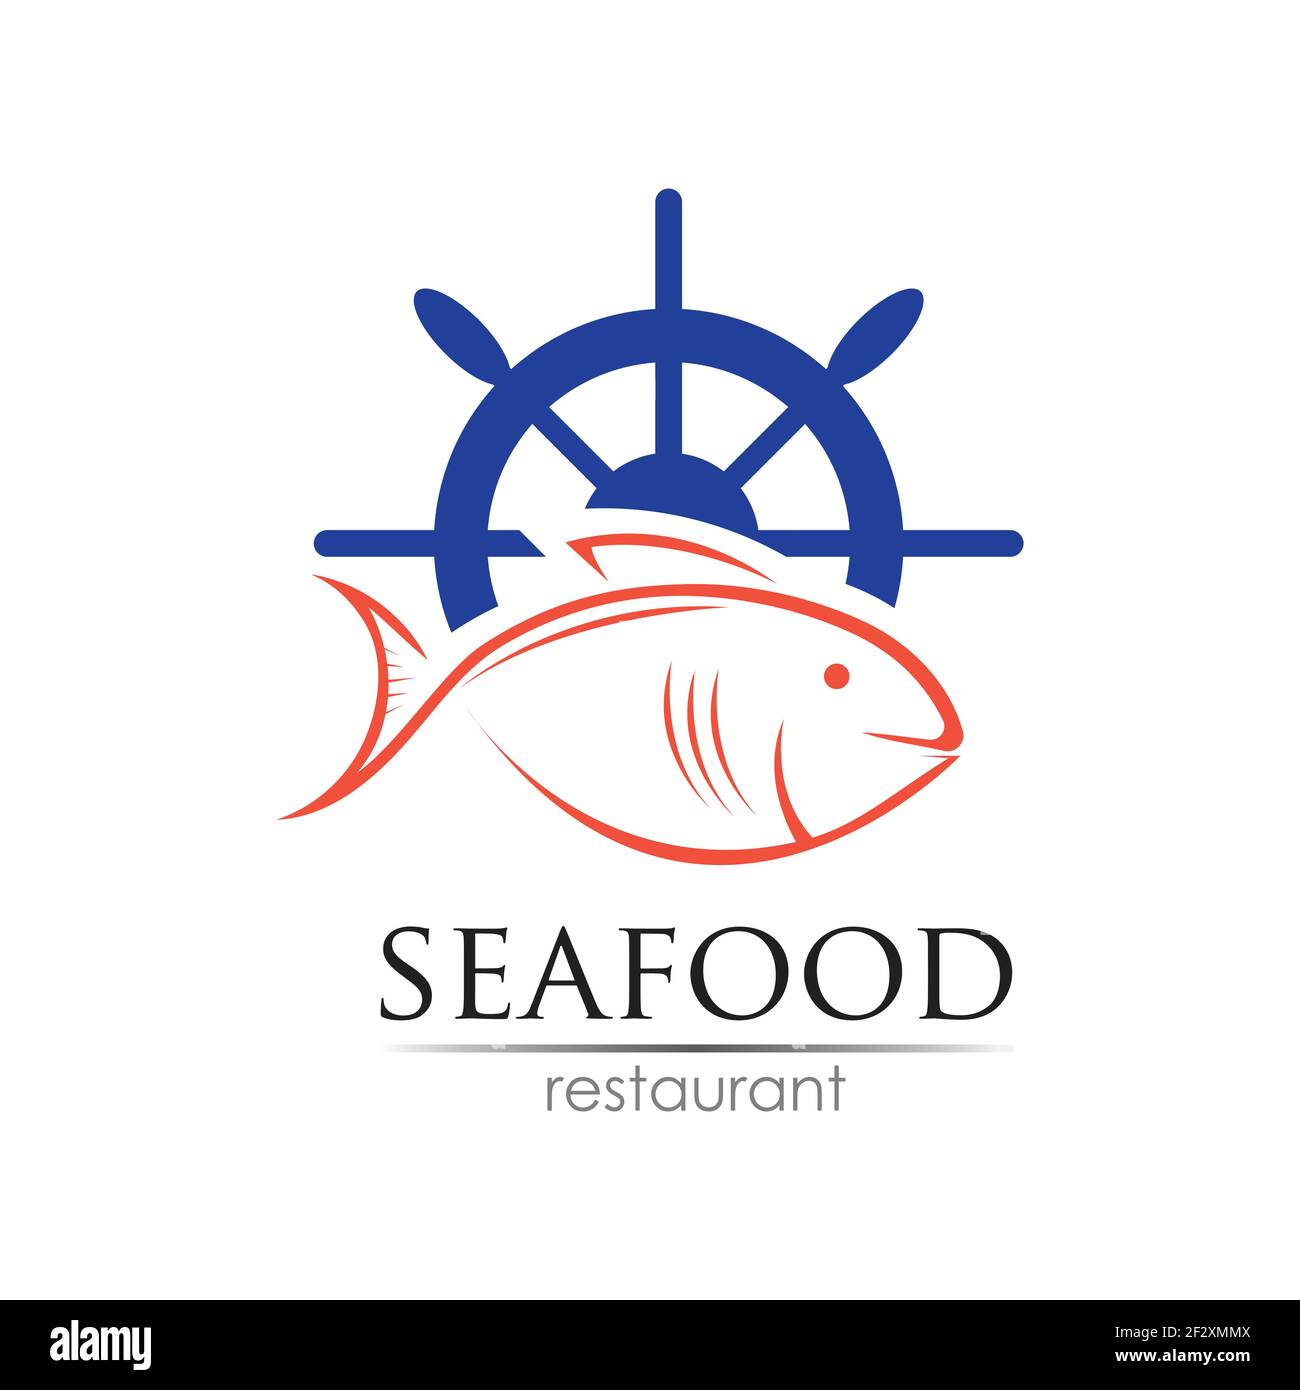 Seafood Restaurant Logo Deals